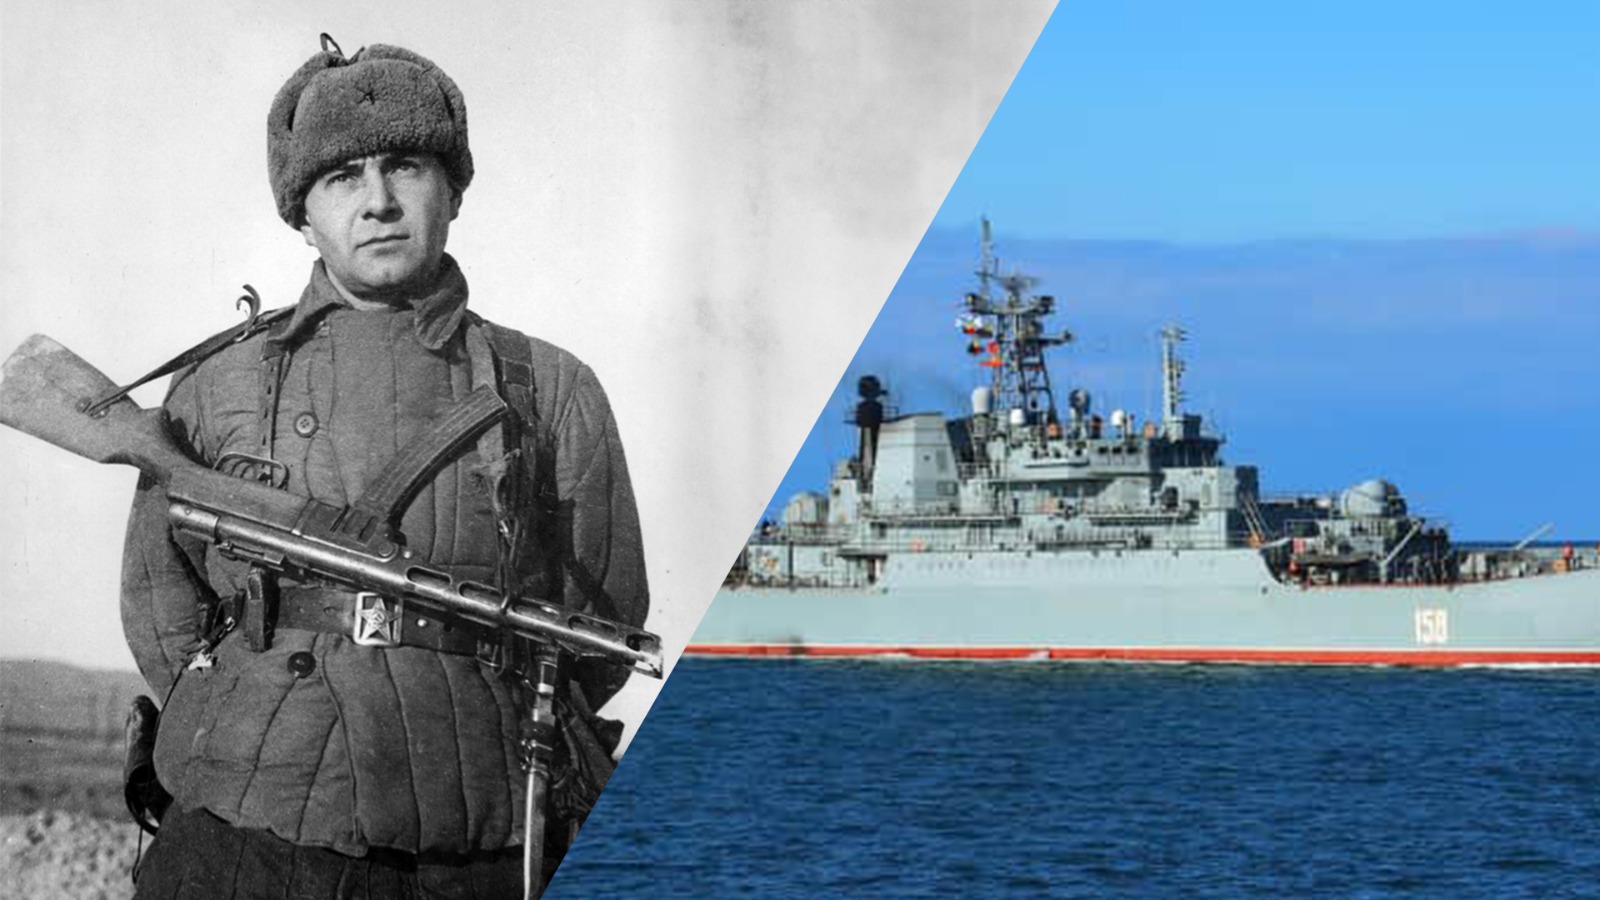 Ukraine sinks the “Tsezar Kunikov”, one of Russia’s newest ships